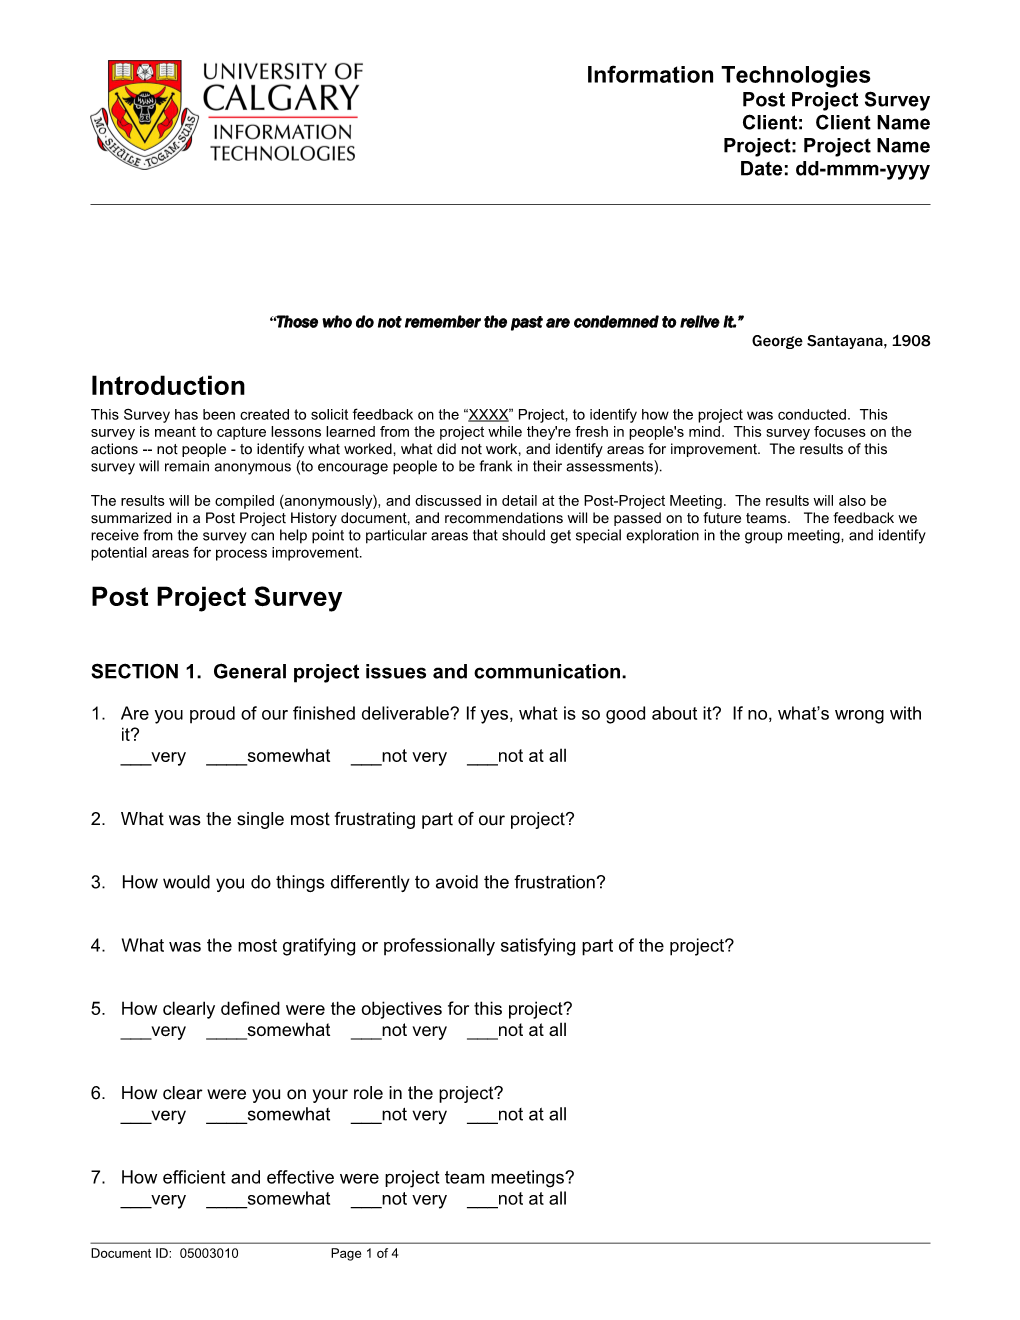 Post Project Review Survey